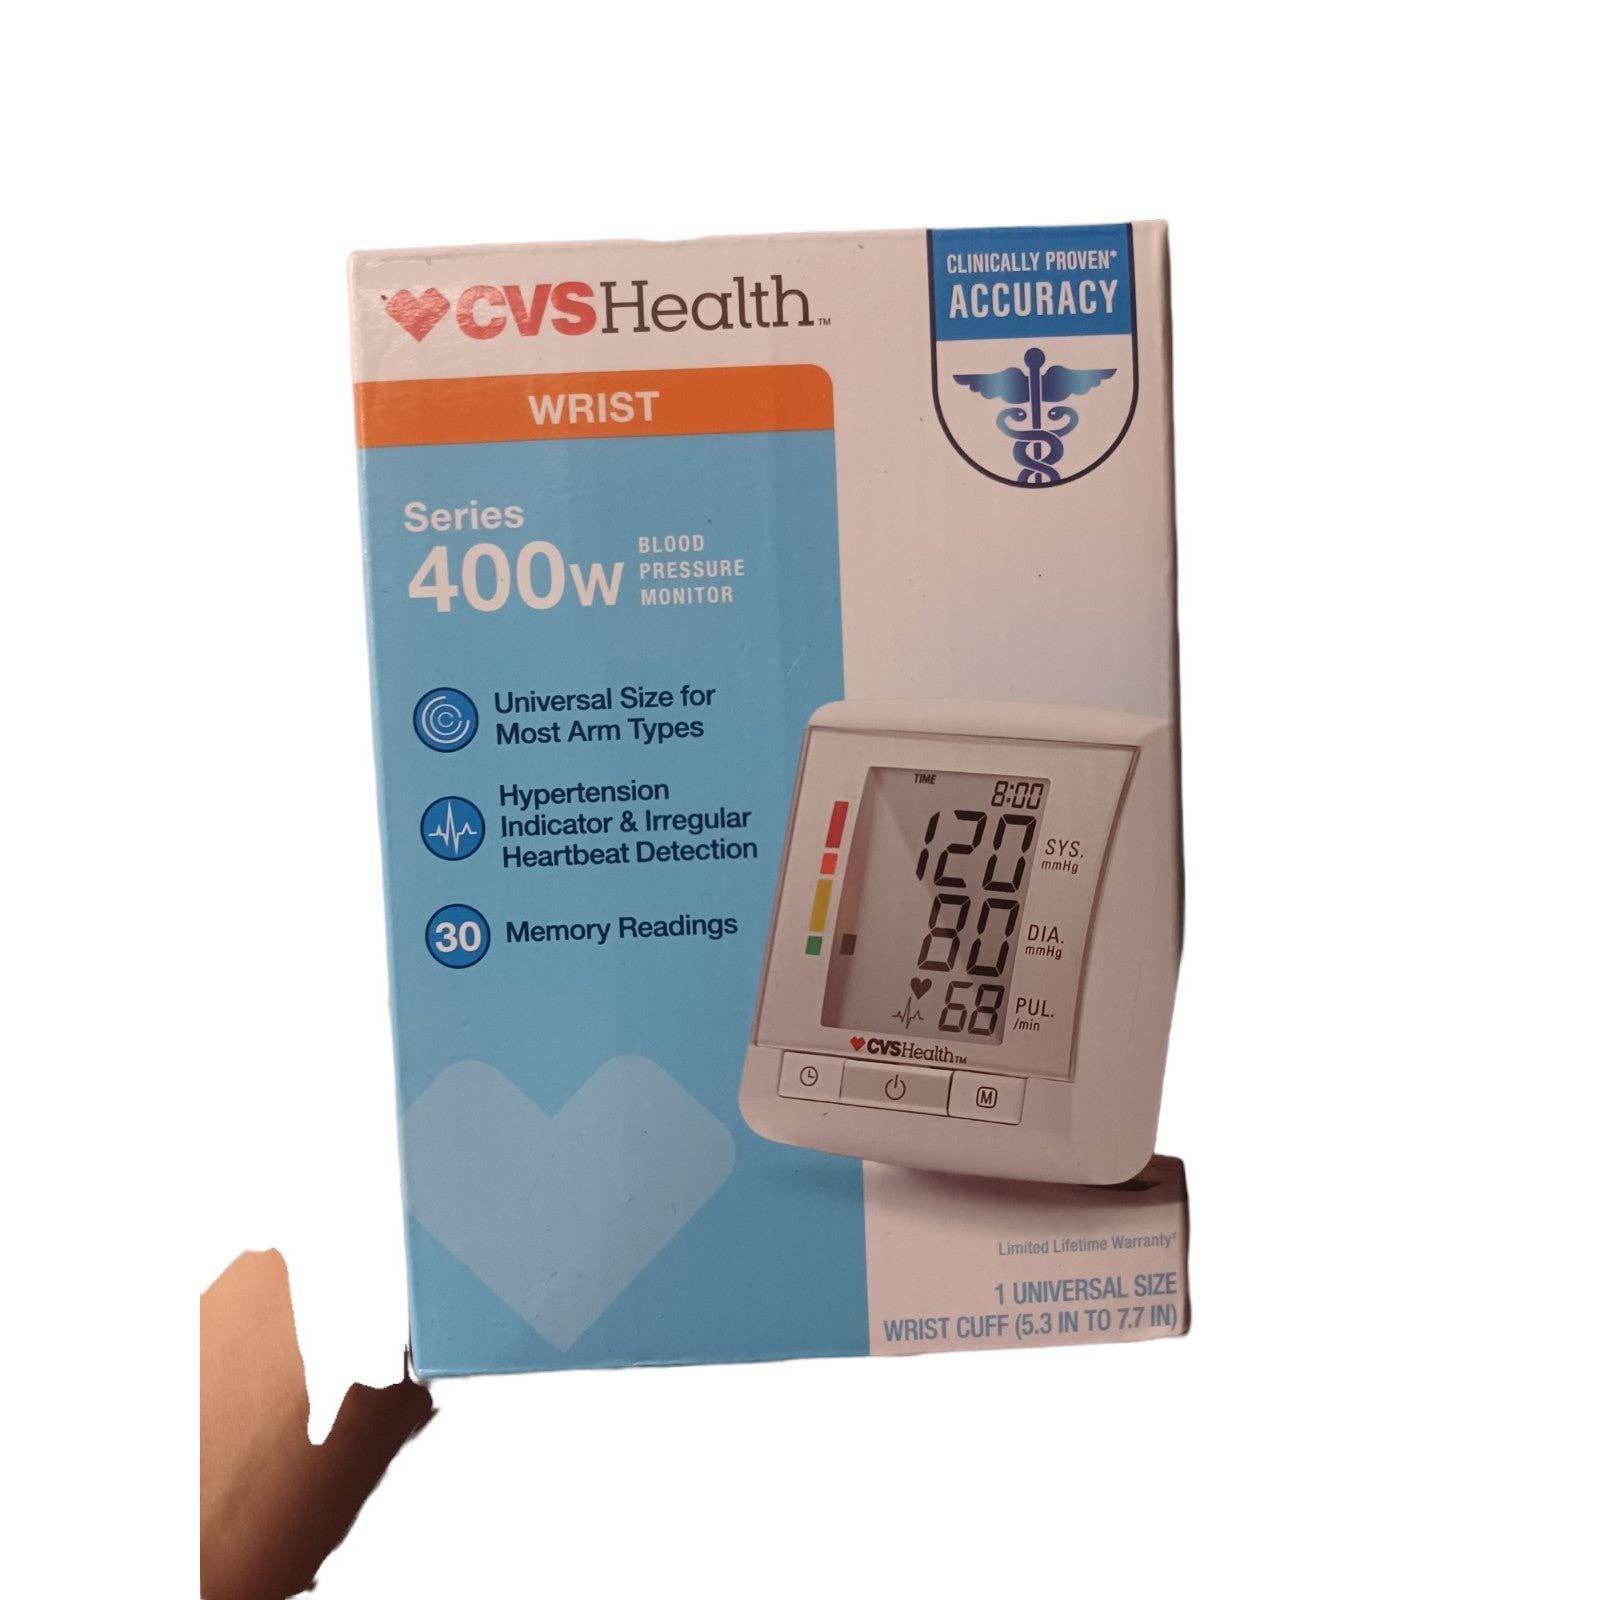 Health Series 400W Wrist Blood Pressure Monitor 2v5dUOQqi